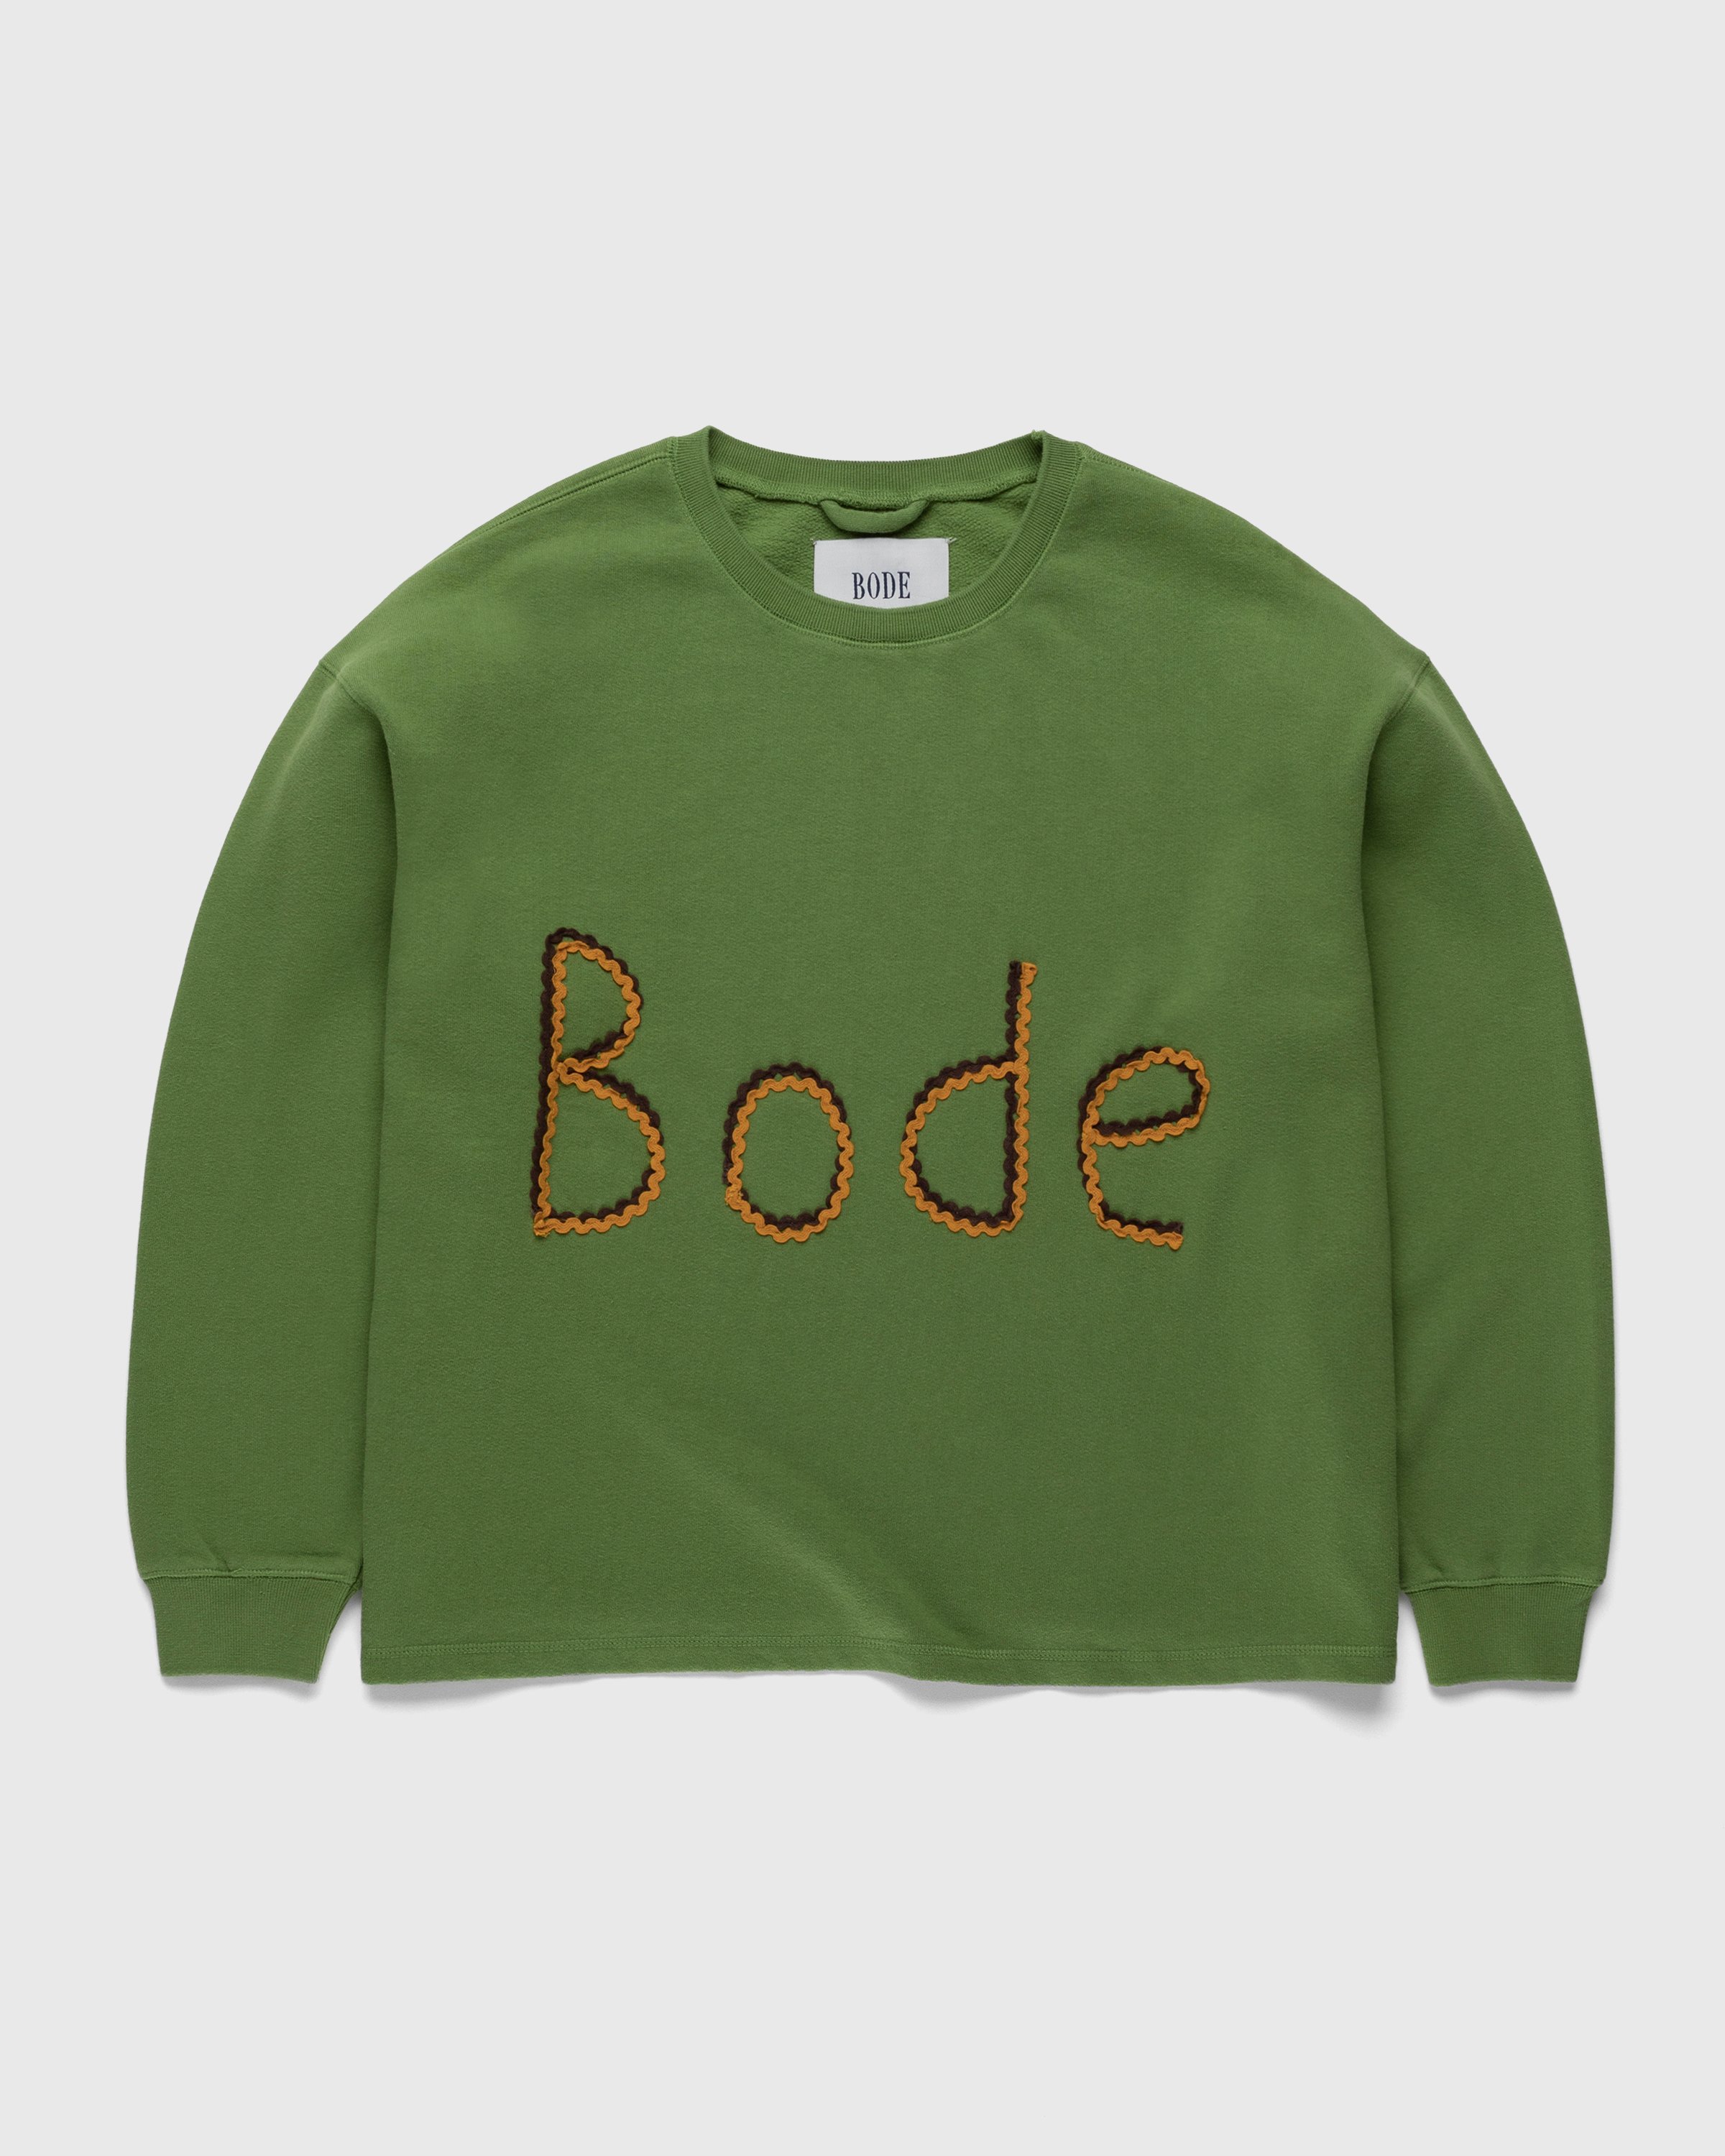 Bode - Rickrack Logo Crewneck Green - Clothing - Green - Image 1